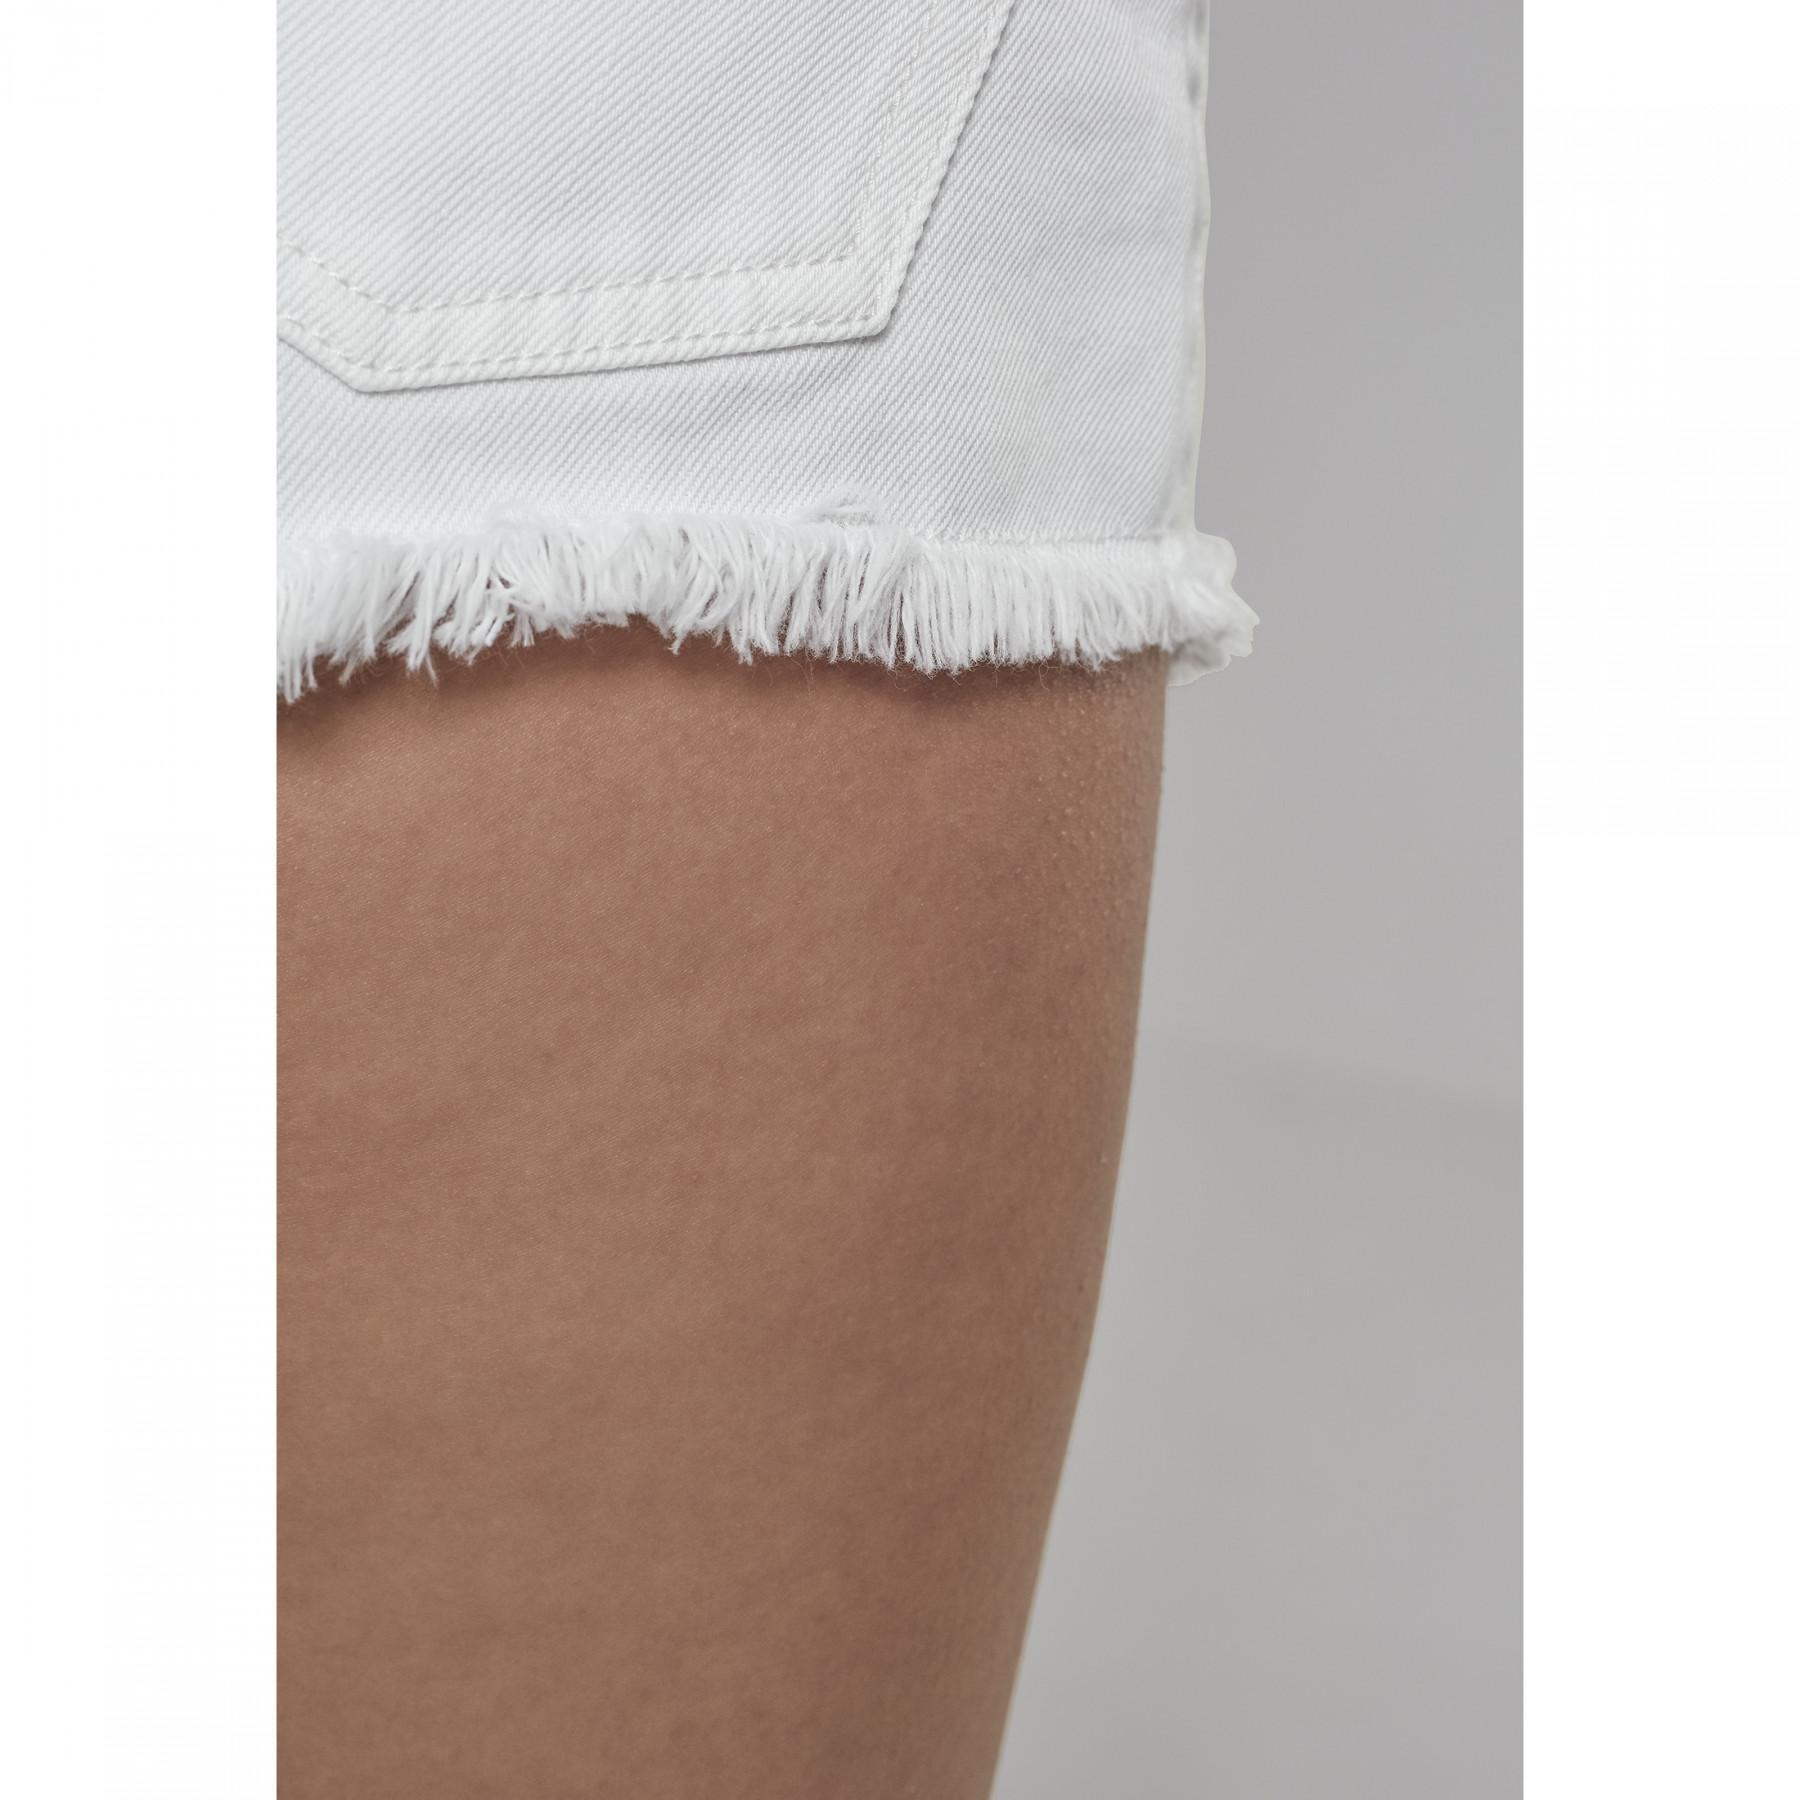 Urban Classic denim hot women's shorts